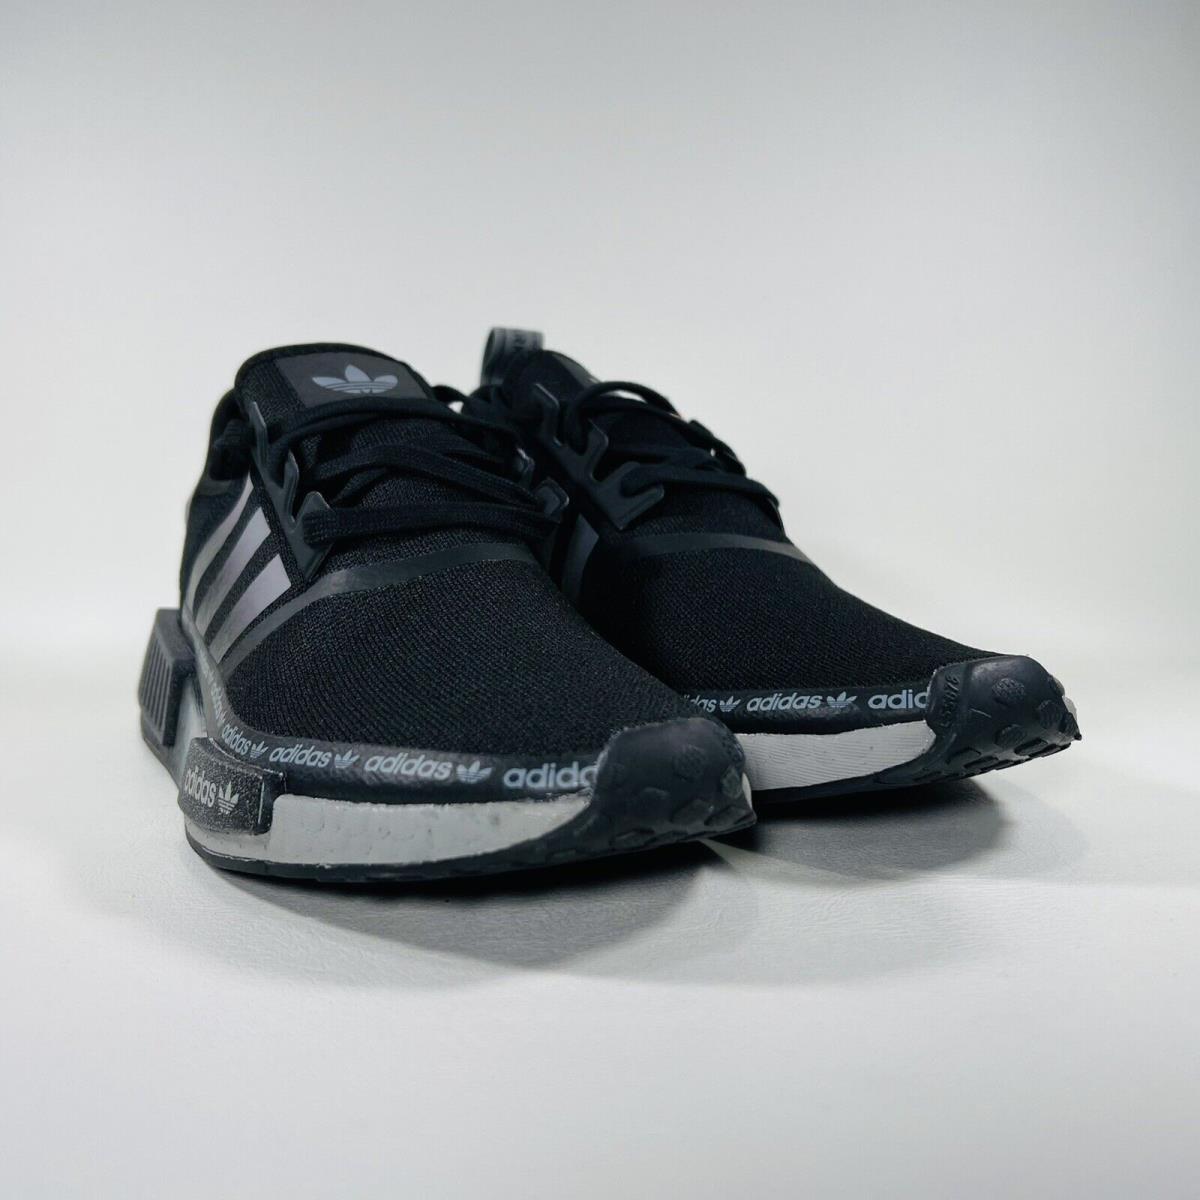 Adidas shoes NMD - Black 14